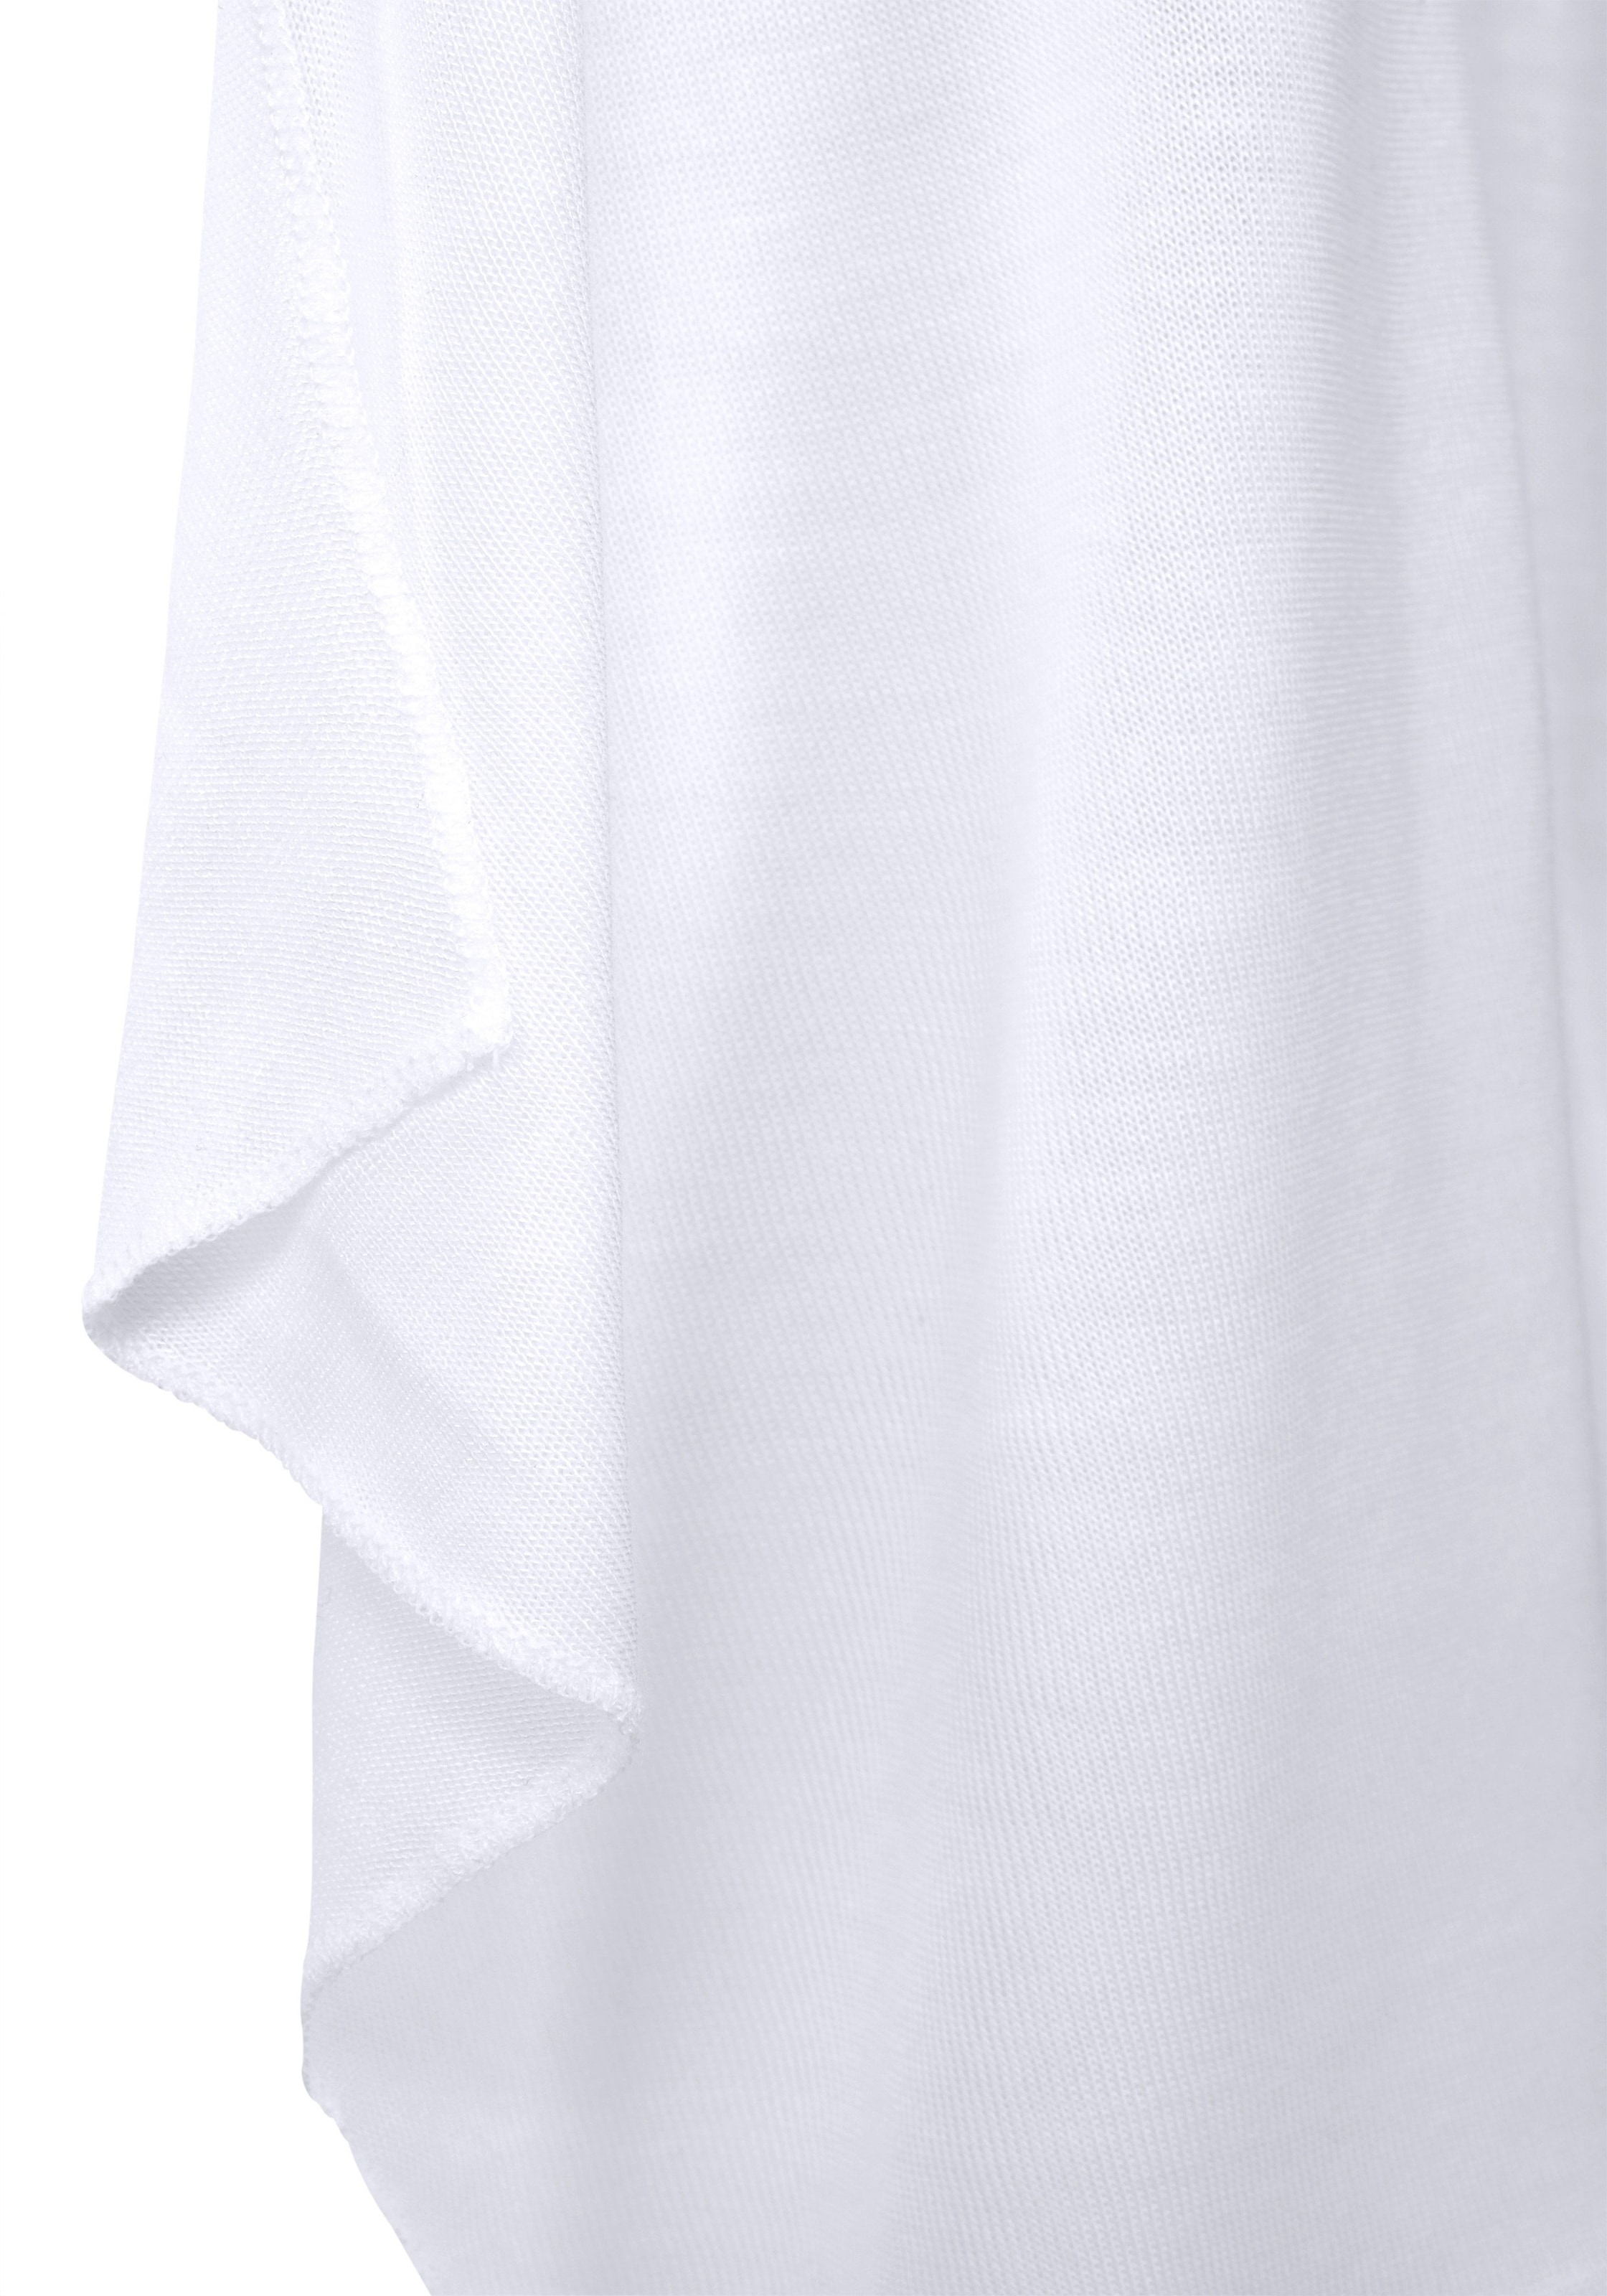 LASCANA Shirtjacke, Unterwäsche Form, Bademode, aus » kaufen online in LASCANA Lingerie | Strickjacke Sommerjacke, & Jersey, offener Cardigan